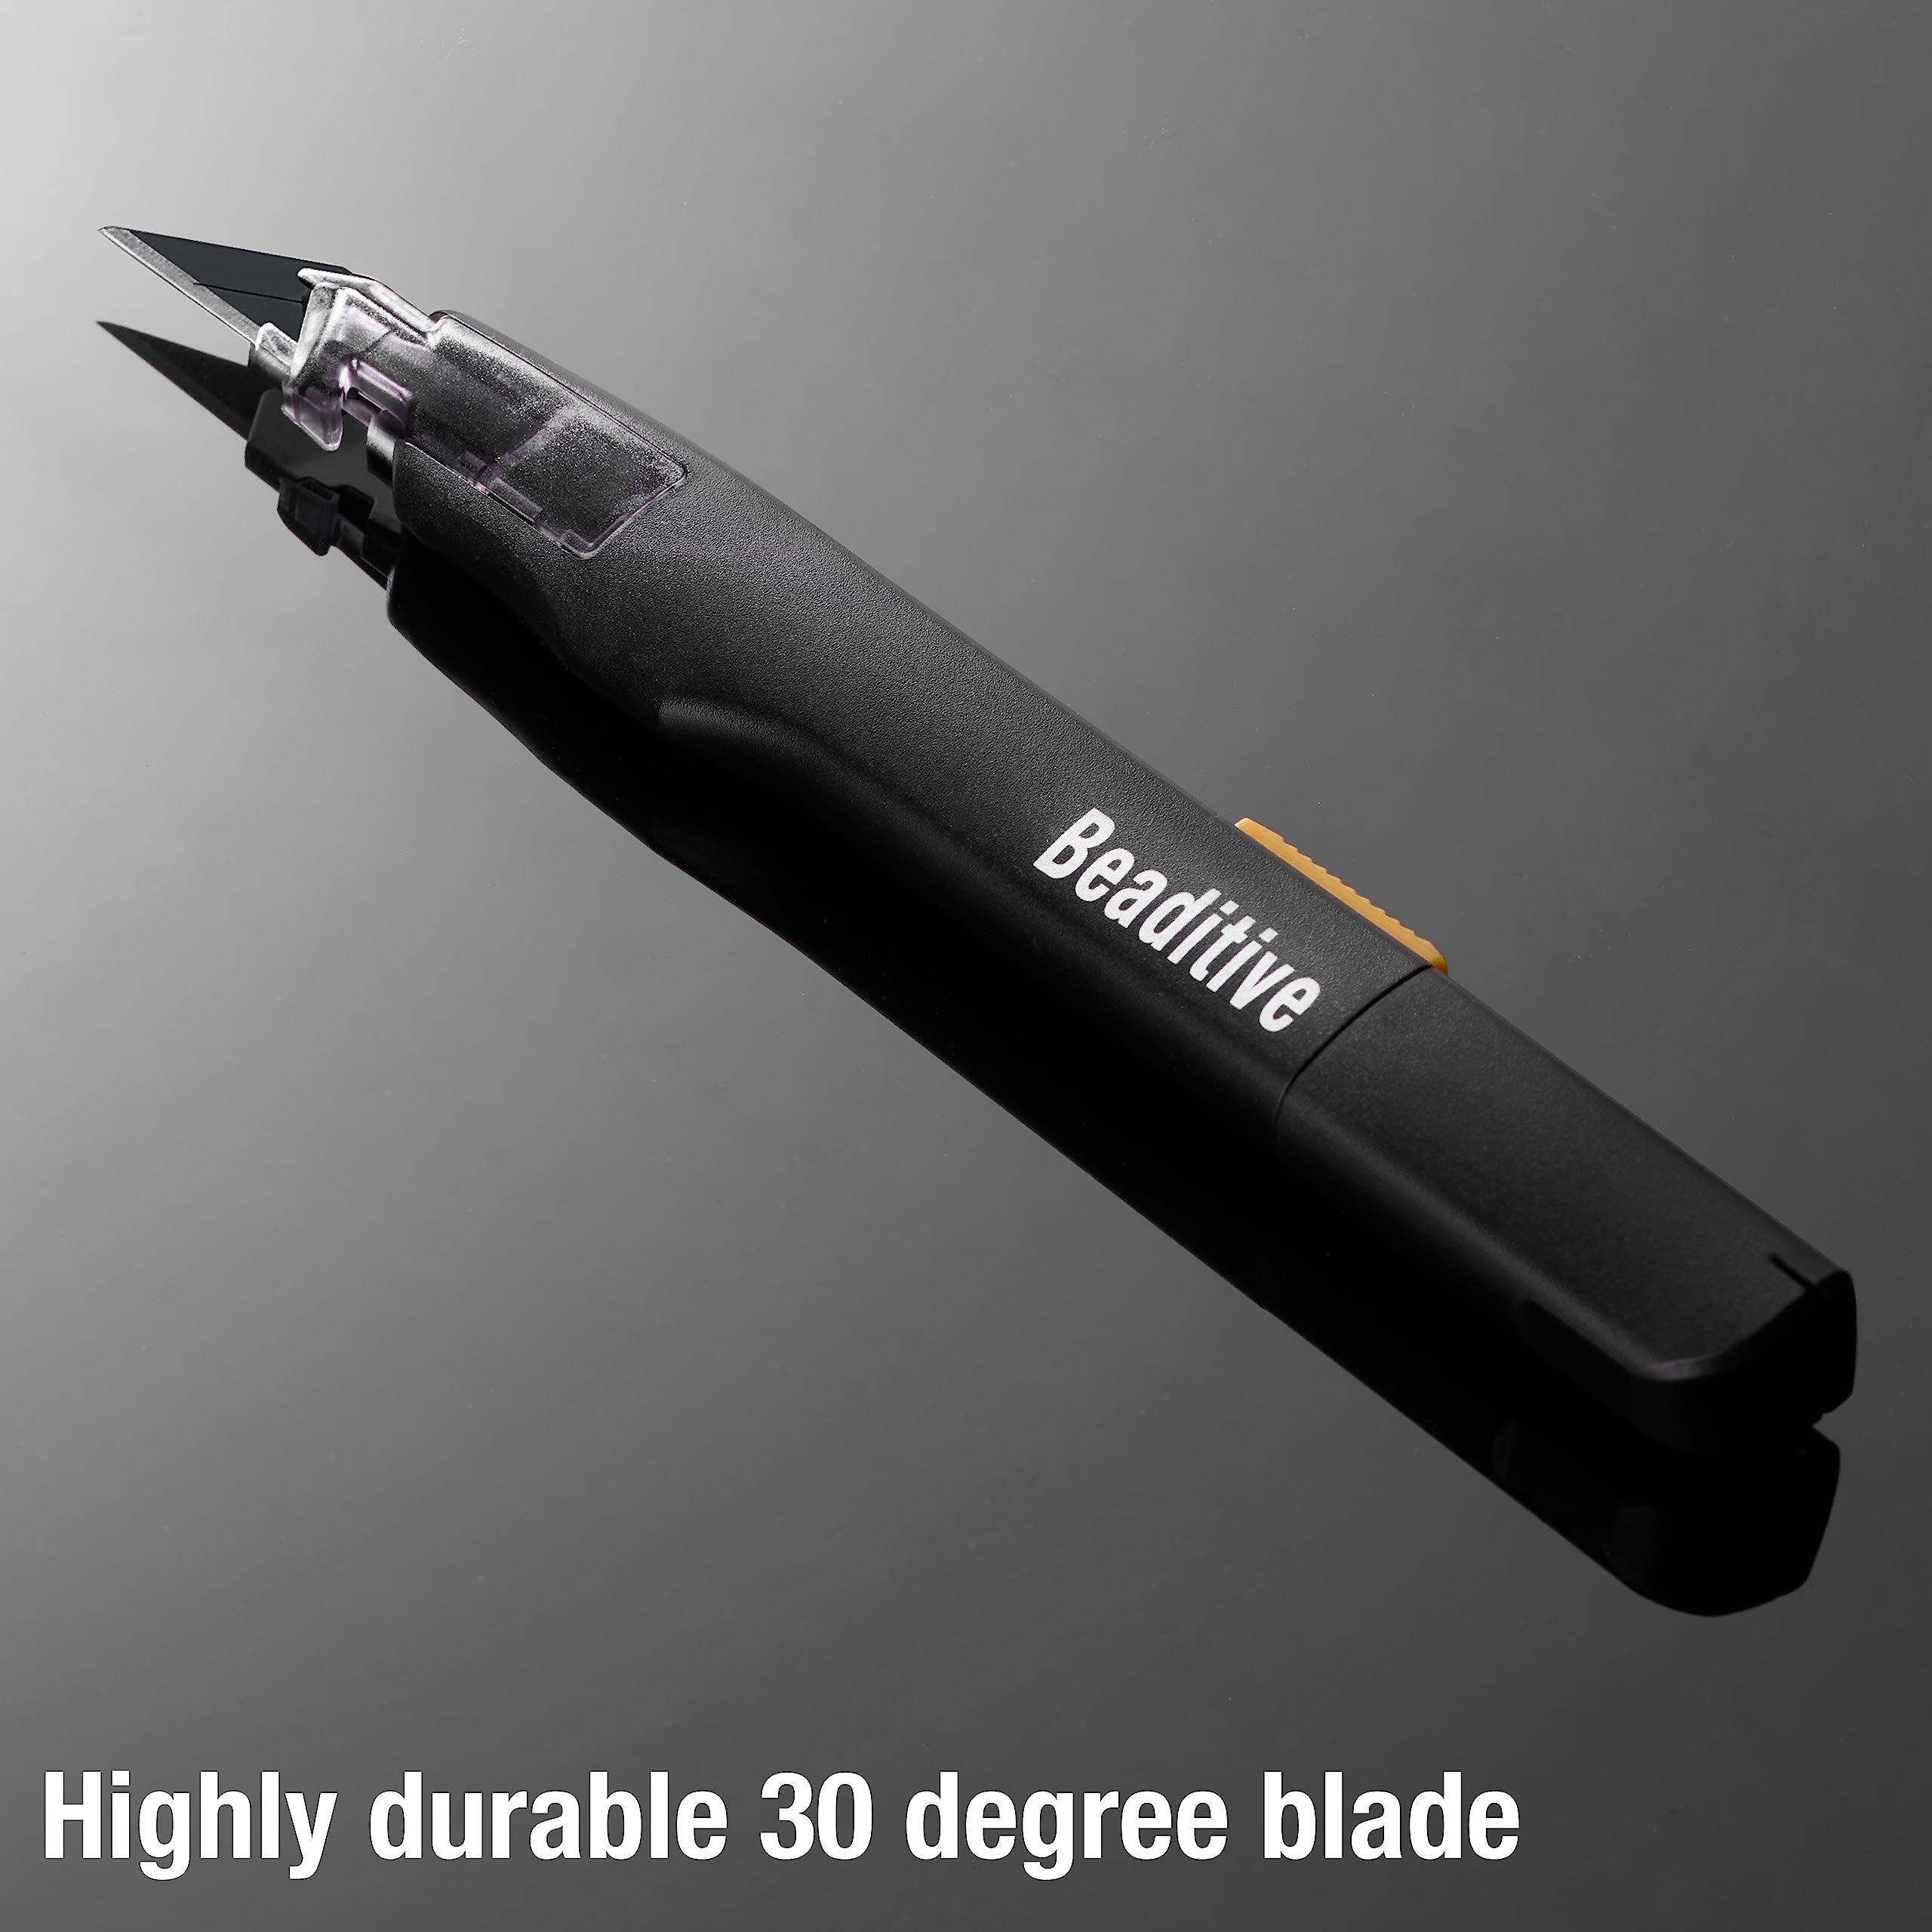 Beaditive High Precision Detail Craft Knife with 10 Blades - 30 Degree Blade Utility Knife - Art, Craft, Model Making (1 Black Knife, 10 Black Blades)